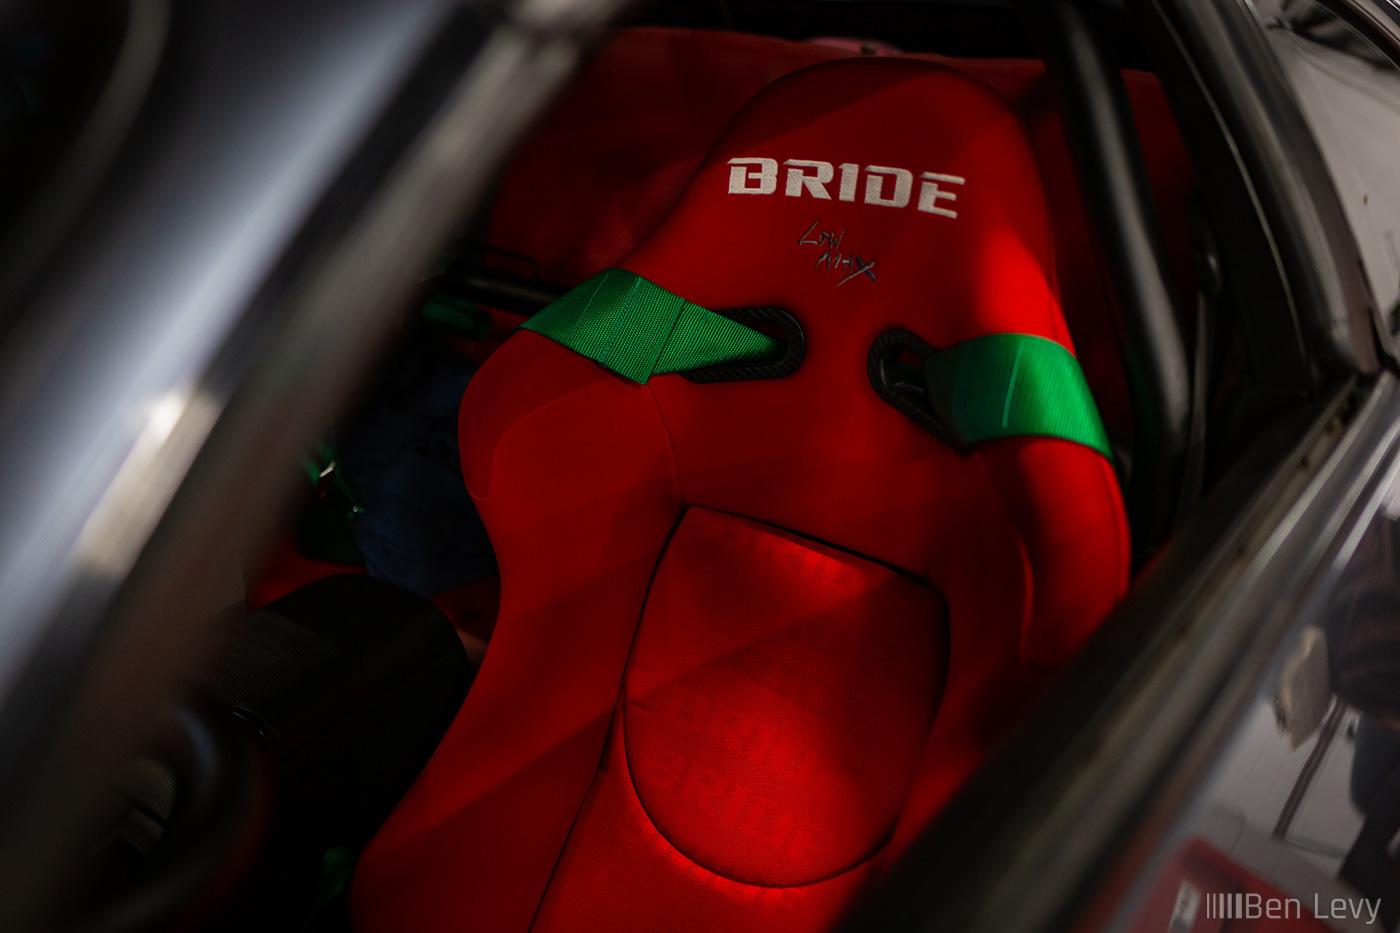 Red Bride Seat in Toyota Supra